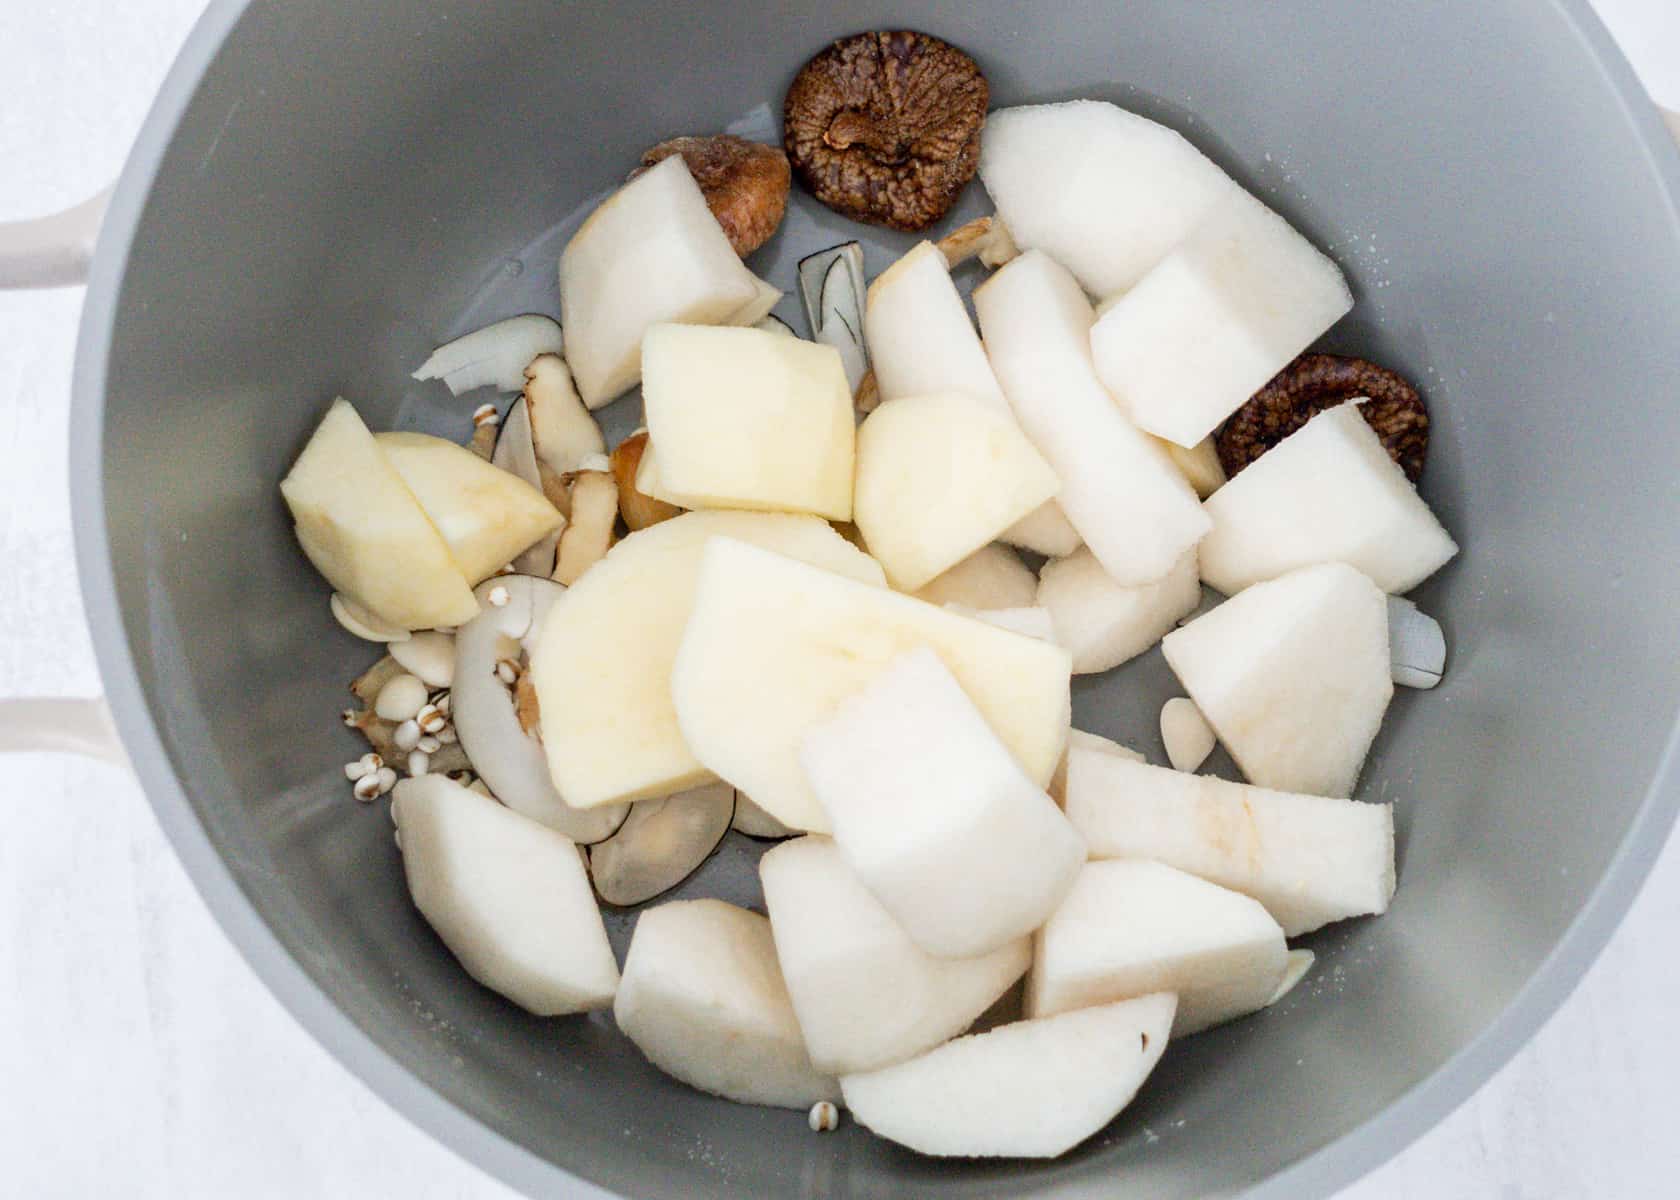 Moisturizing Chinese Apple Sea Coconut Soup 雪梨蘋果海底椰玉竹無花果湯